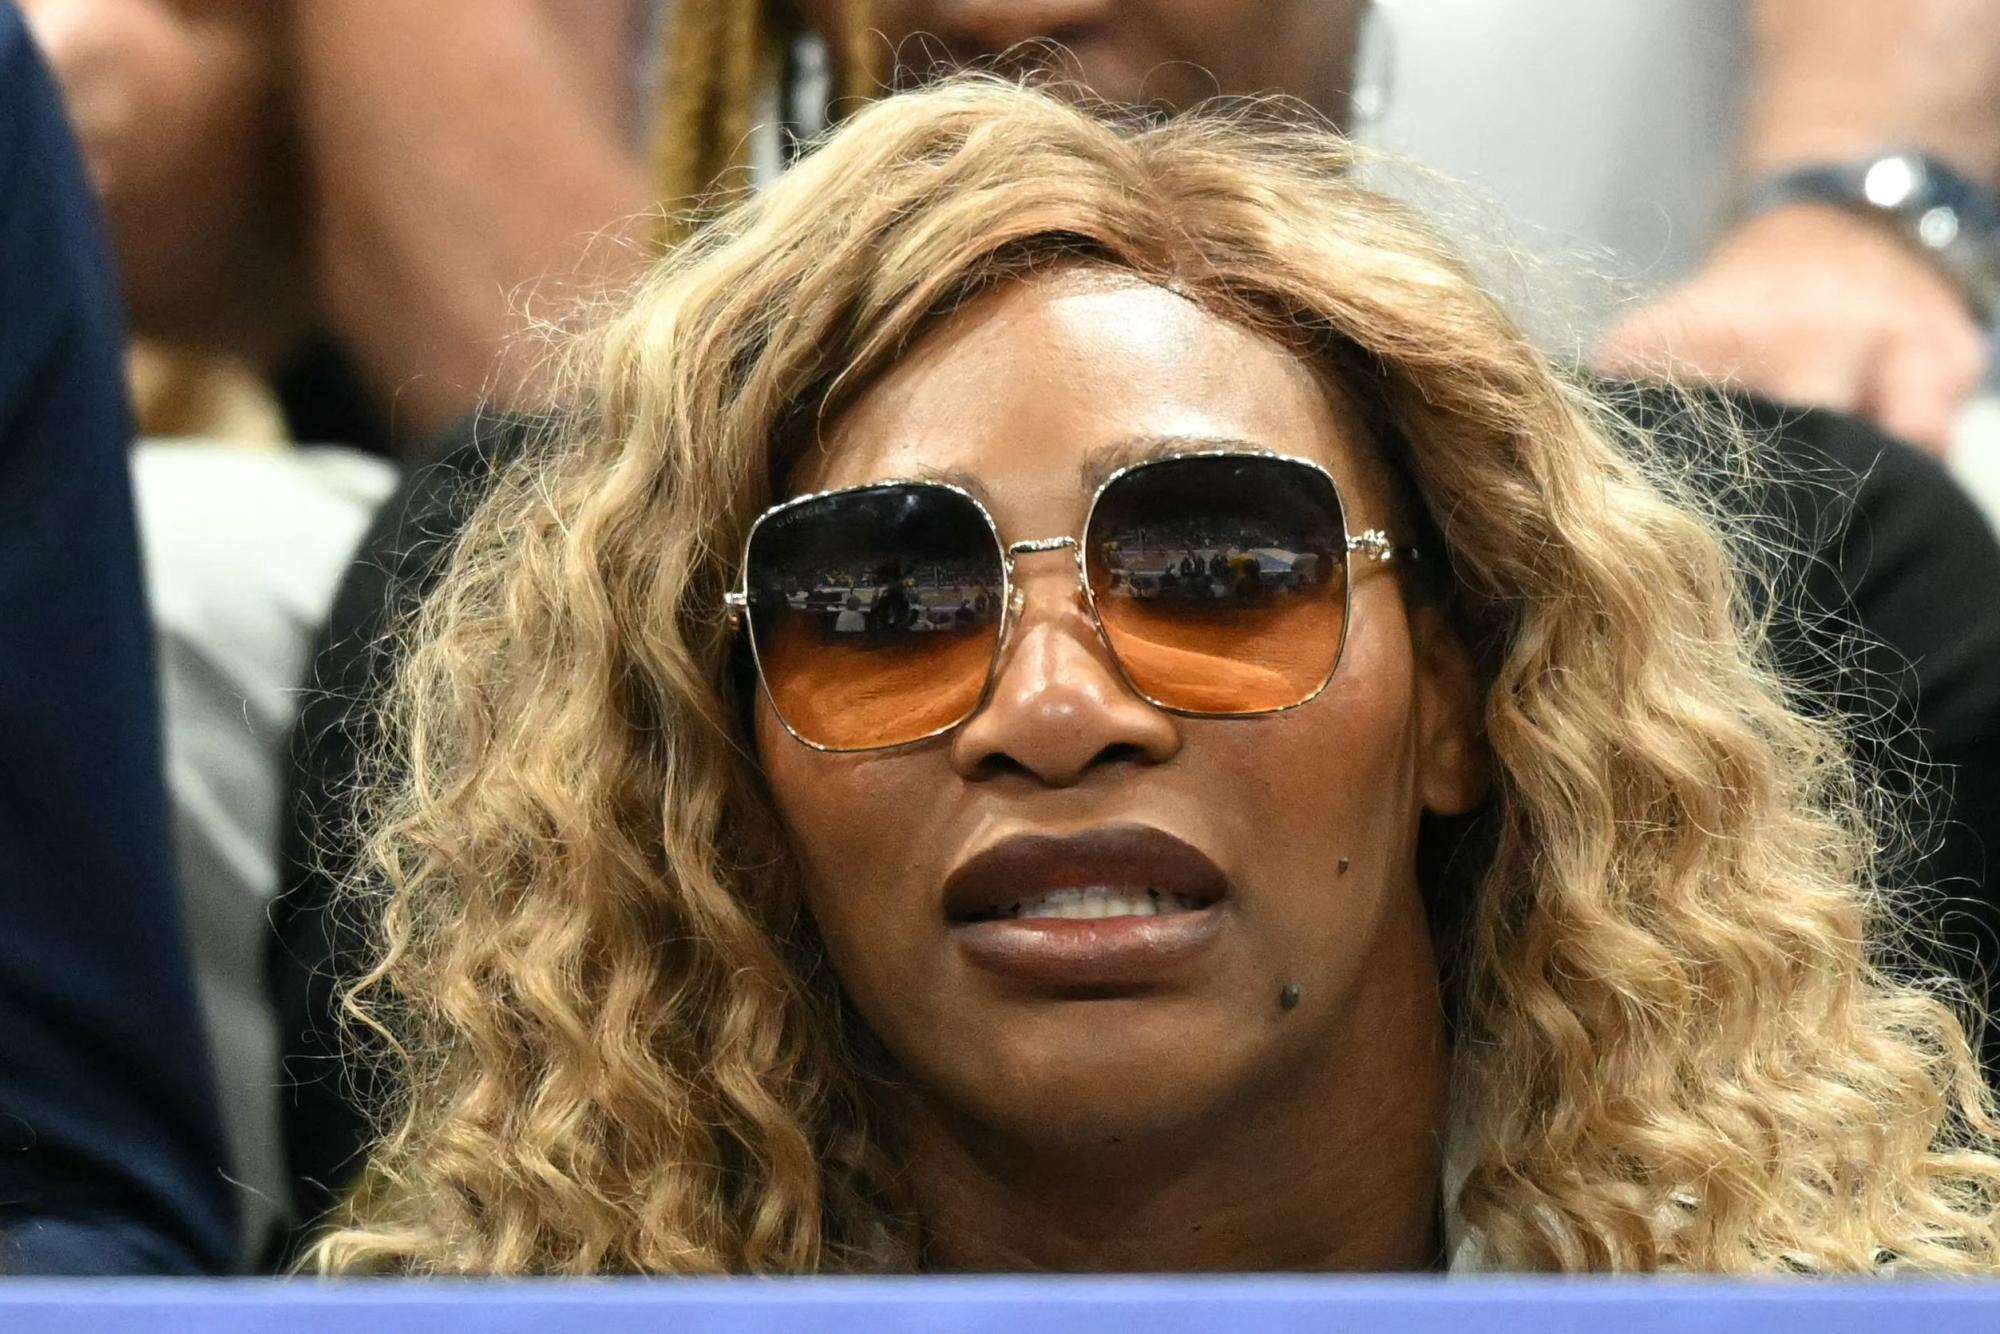 Zutritt zu Restaurant verweigert: Serena Williams prangert 5-Sterne-Hotel in Paris an